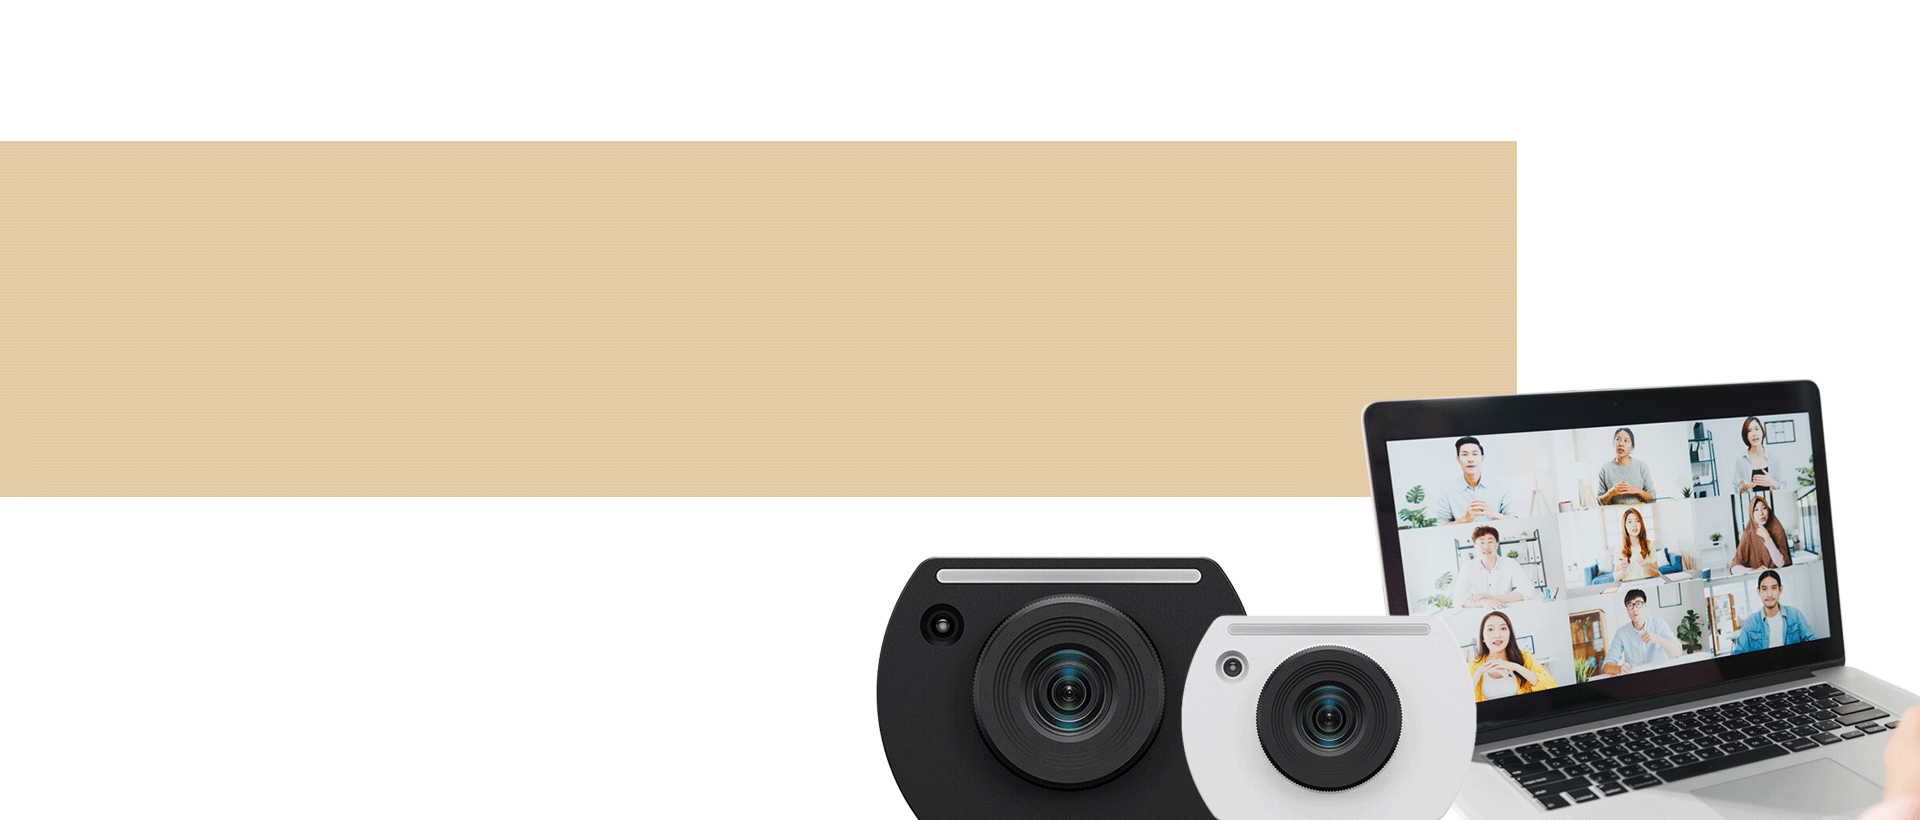 SONY KOREA, 4K 60P IP 원격 카메라, 작고 가벼운 고정형 카메라 화상회의, 강의 및 영상제작까지 라는 문구와 함께 흰 배경에 베이지색 띠가 문구 아래 그어져 있으며, 흰색, 검정색의 SRG-XP1 이미지와 화상회의 중인 화면이 띄워진 노트북의 이미지가 함께 있습니다.